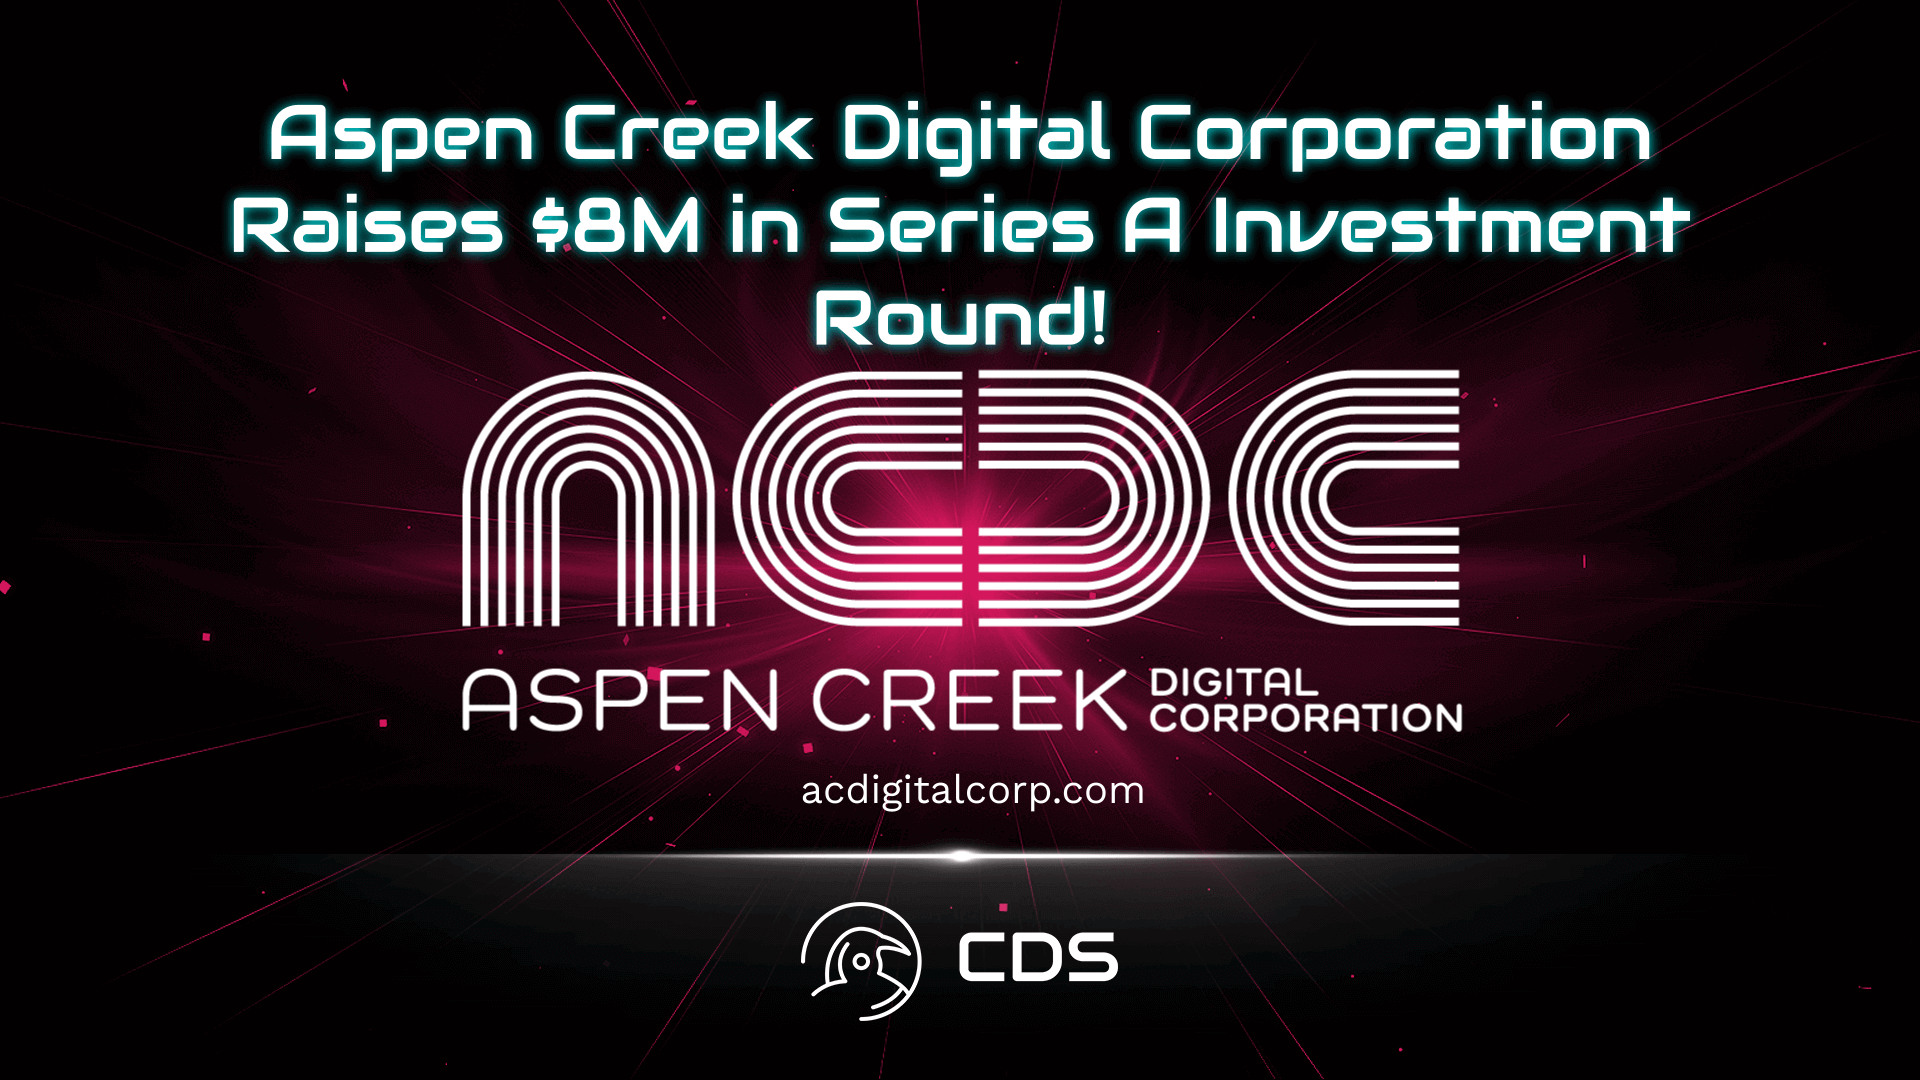 Aspen Creek Digital Corporation Raises $8M in Series A Investment Round!